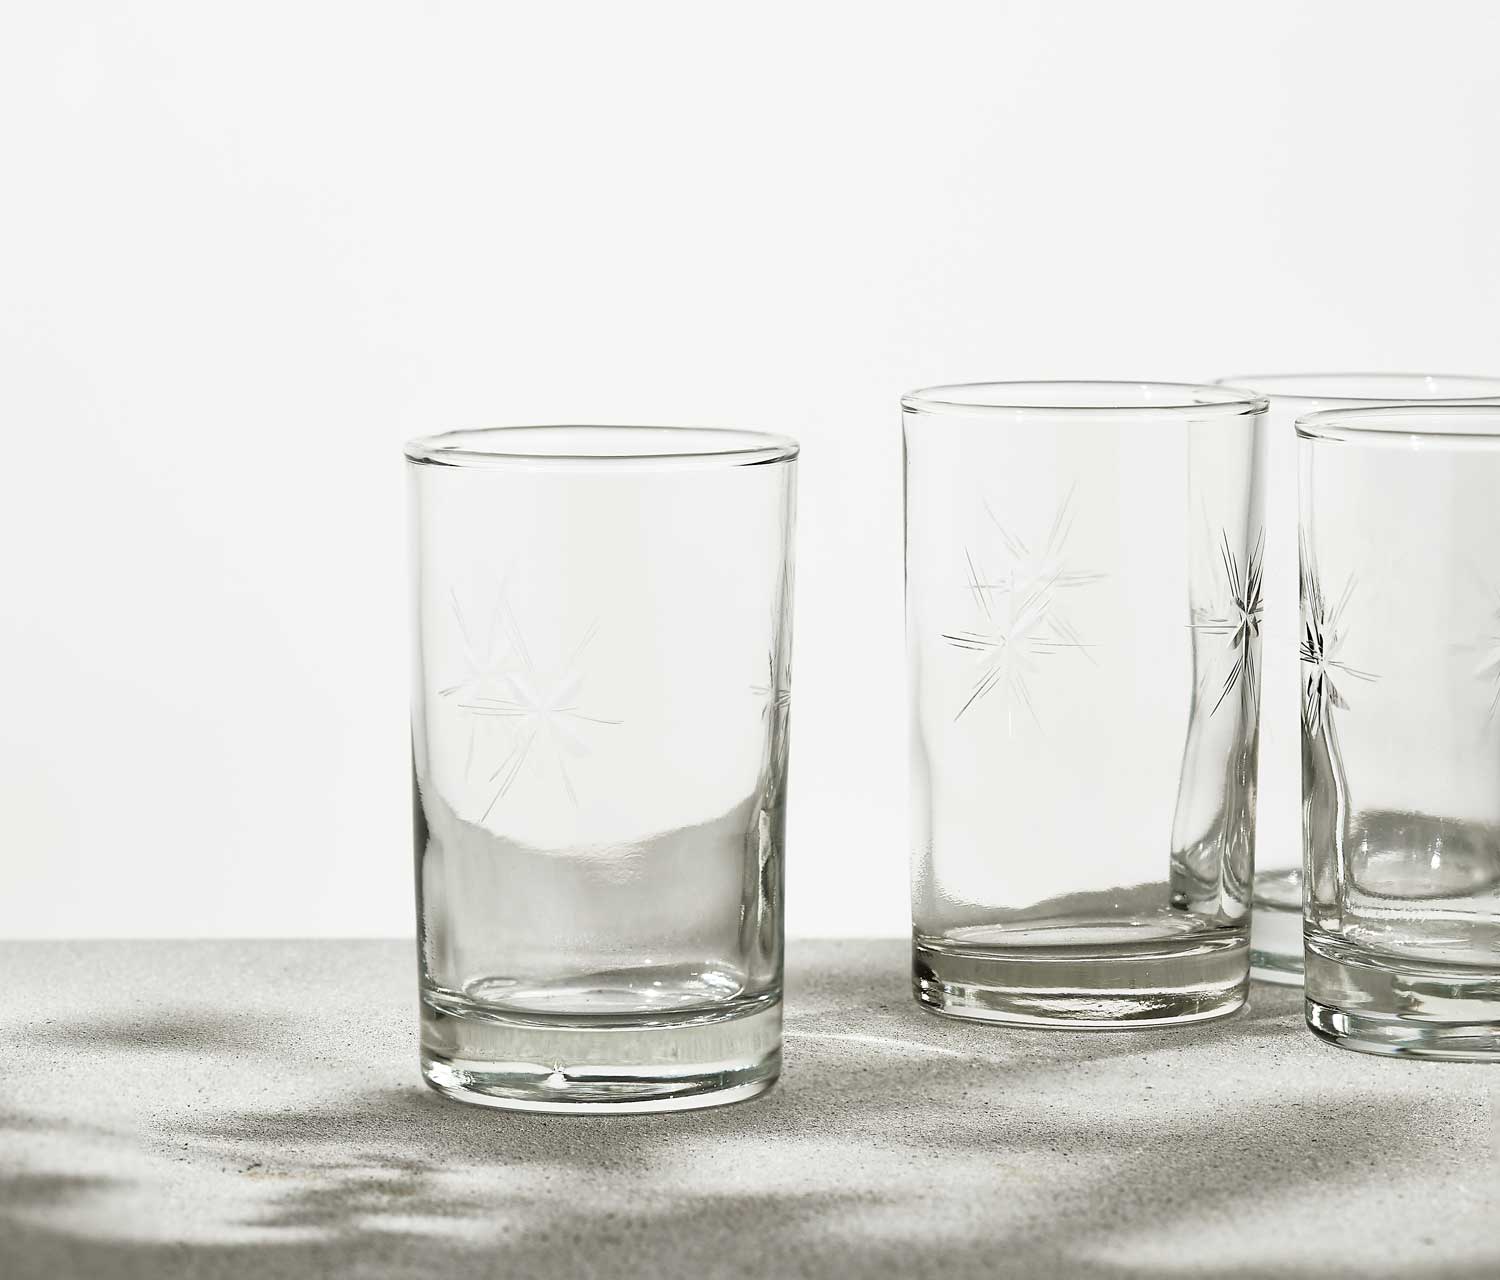 Cut Glass Starburst Set of 4 Drinking Glasses Vintage 4 Inch Juice Or  Cocktail